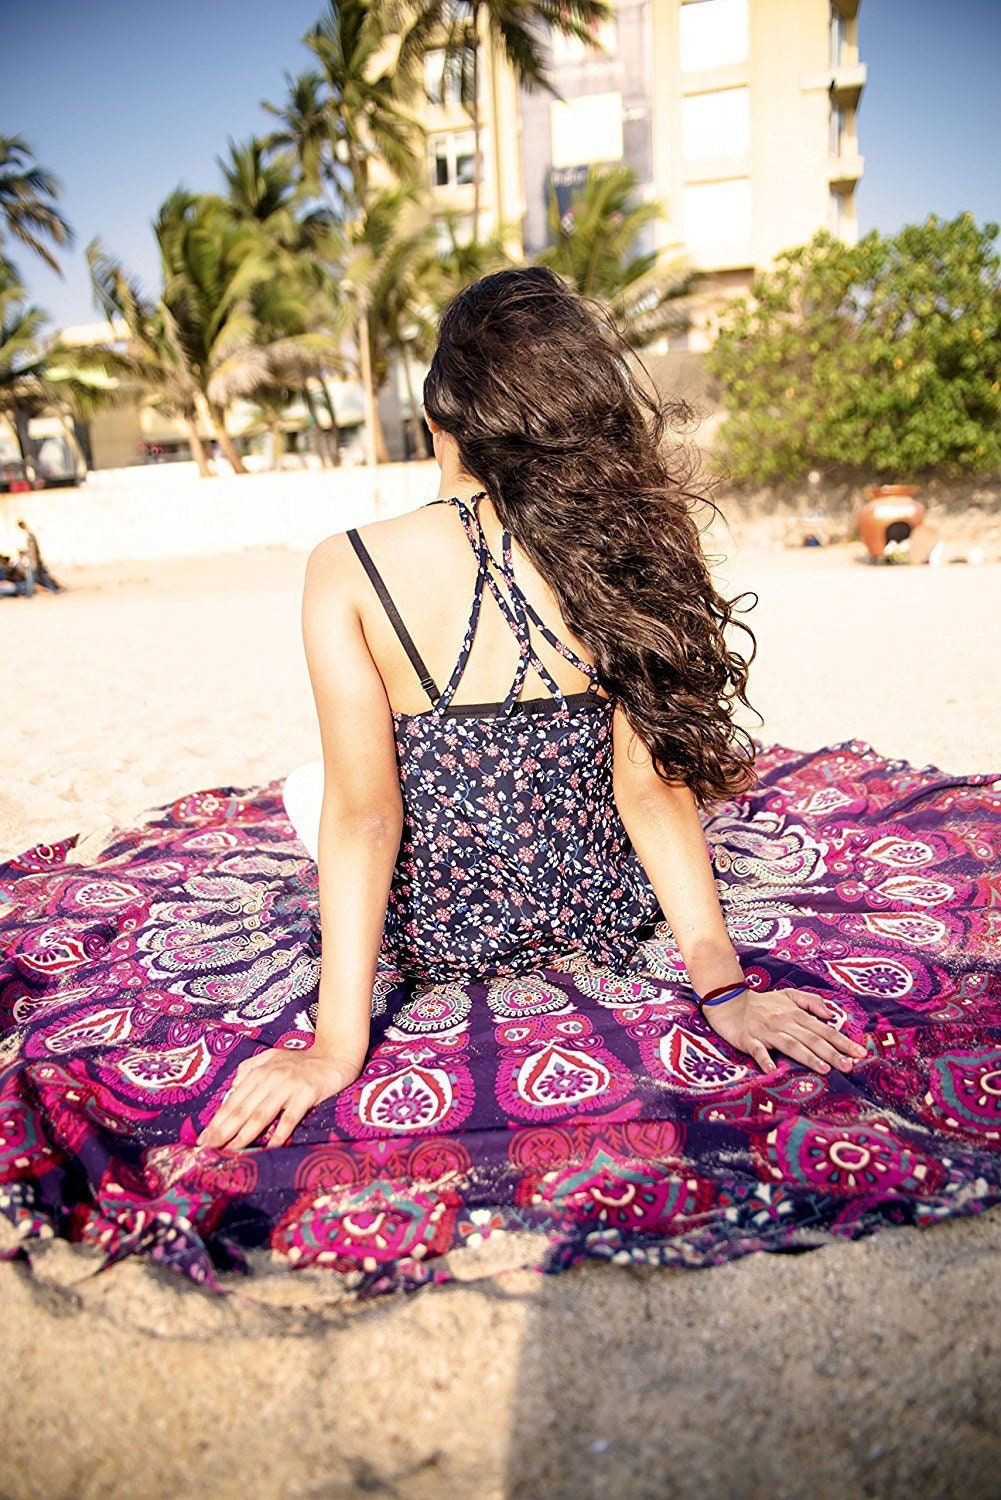 Indian Mandala Round Tapestry Boho Hippie Yoga Beach Sunshade Blanket Towel Mats 